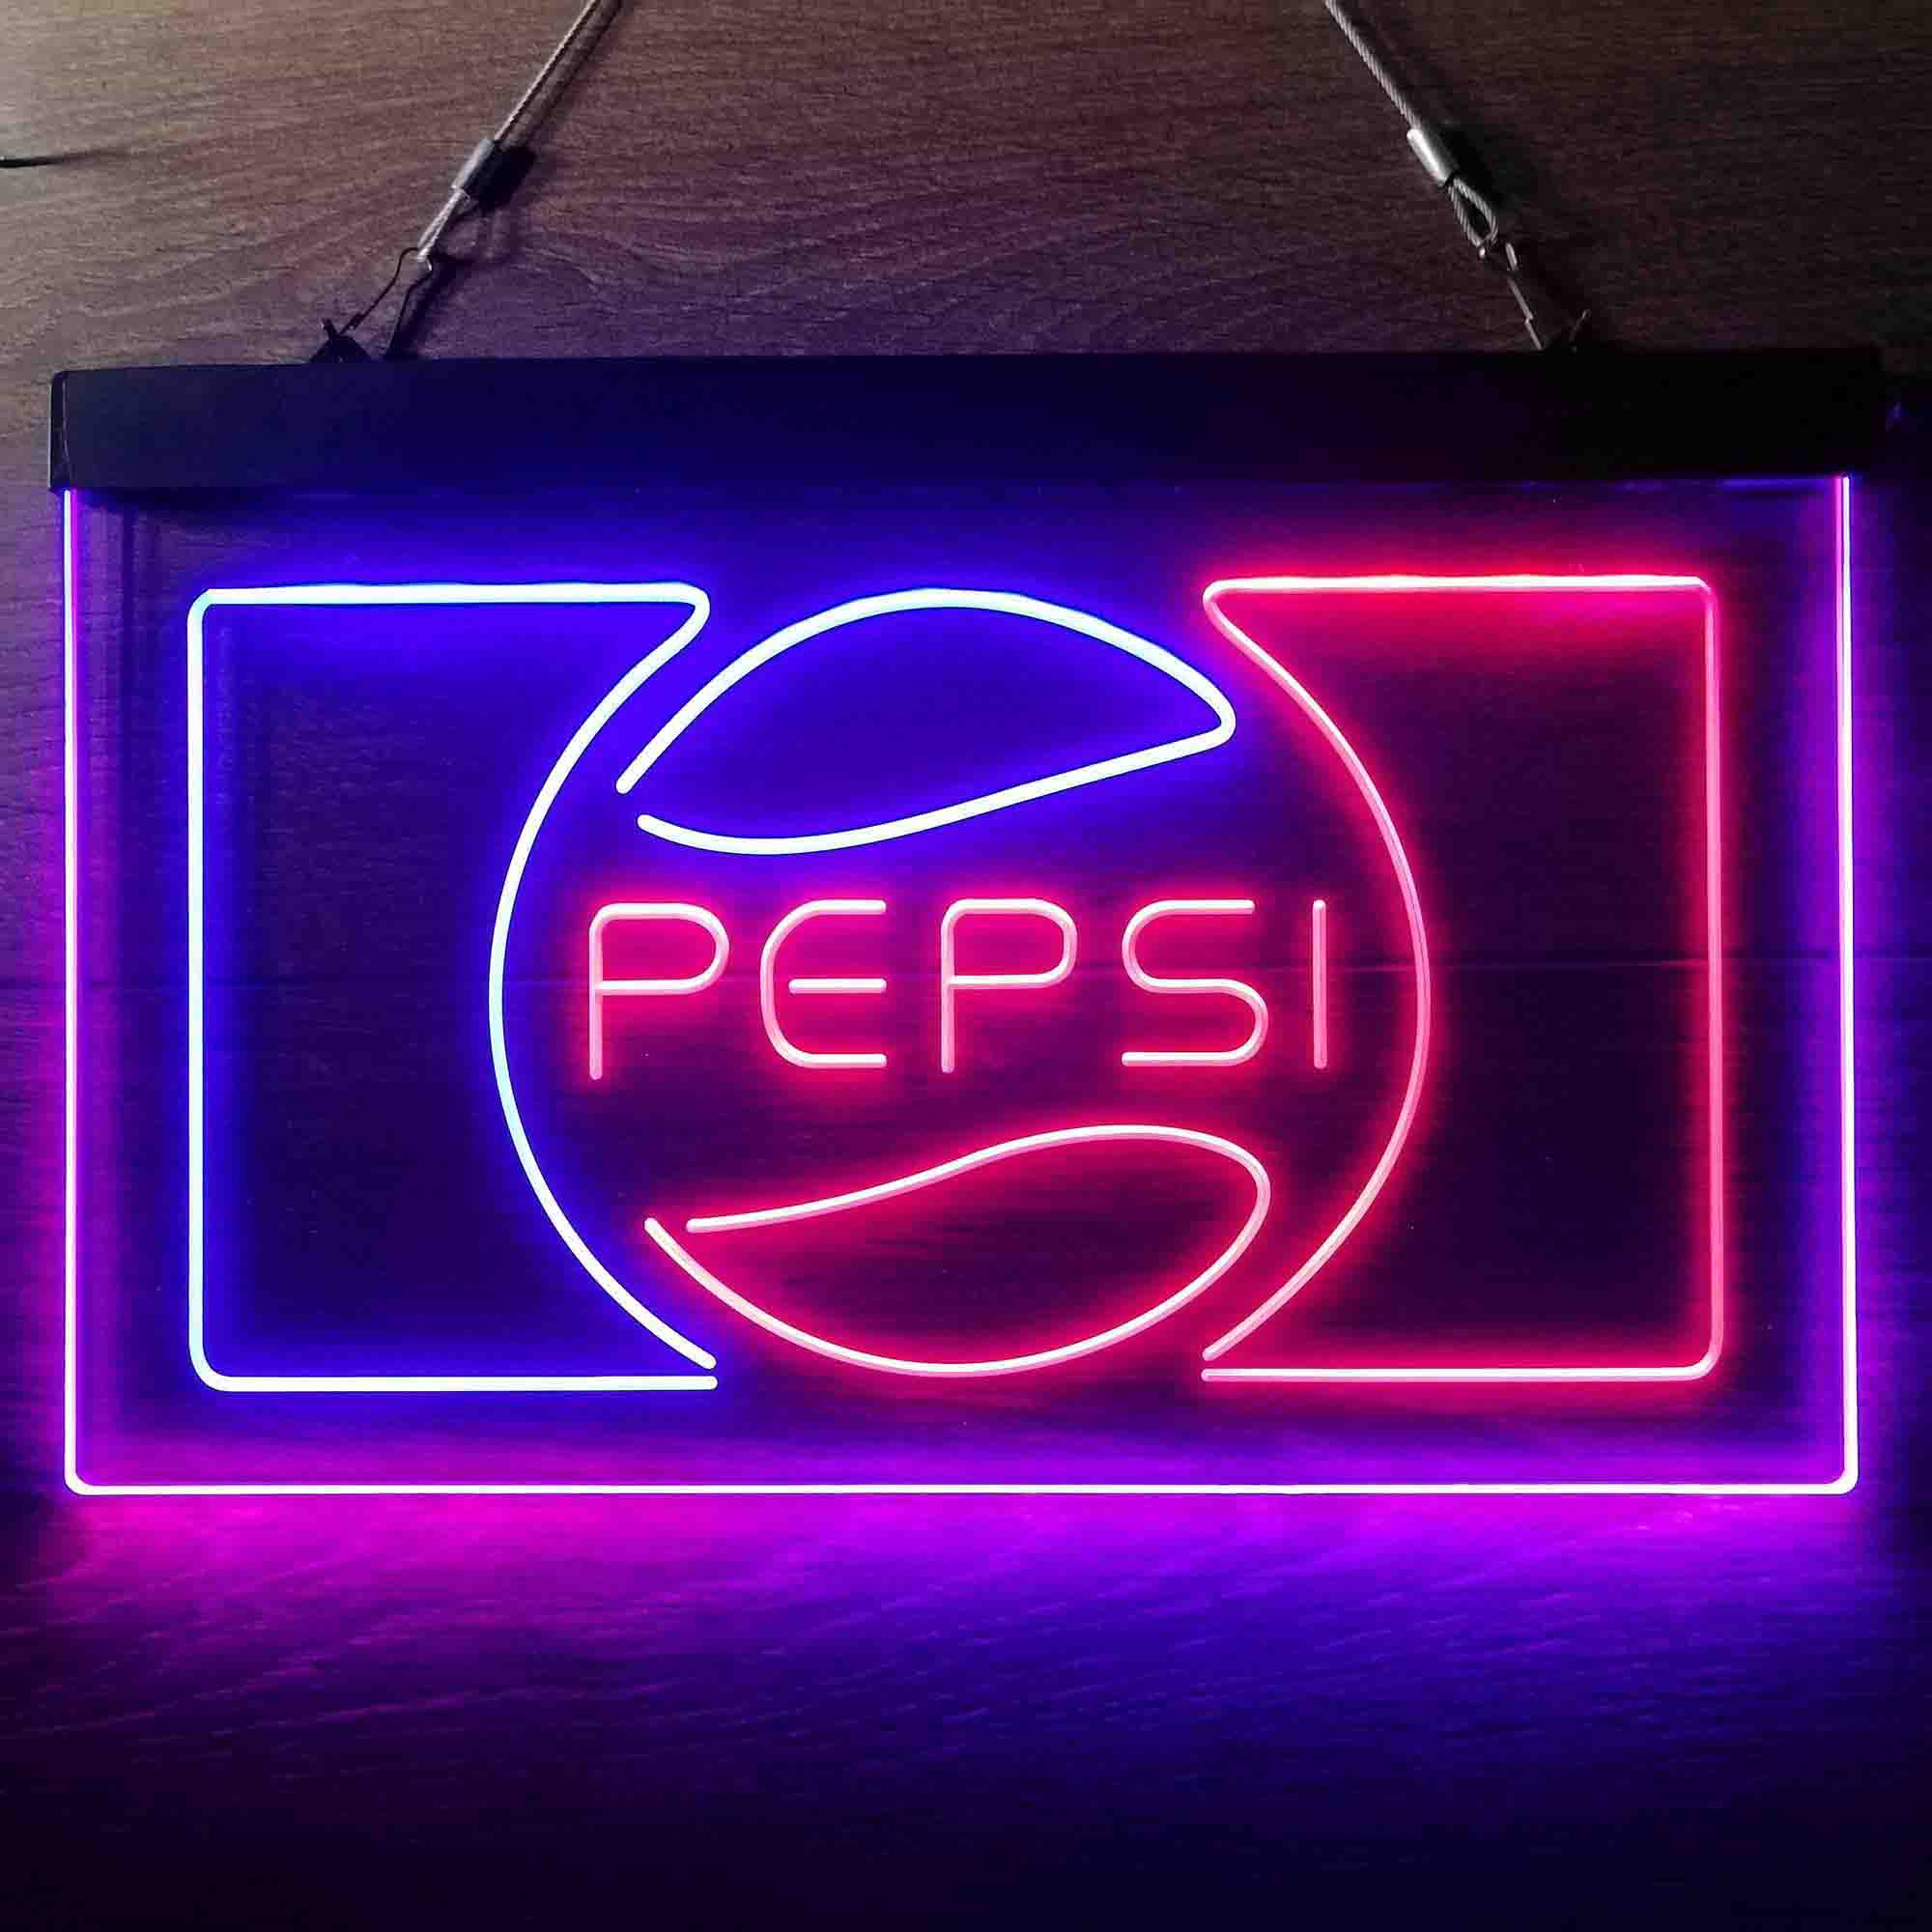 Pepsi Cola Classic Drink Neon-Like LED Sign